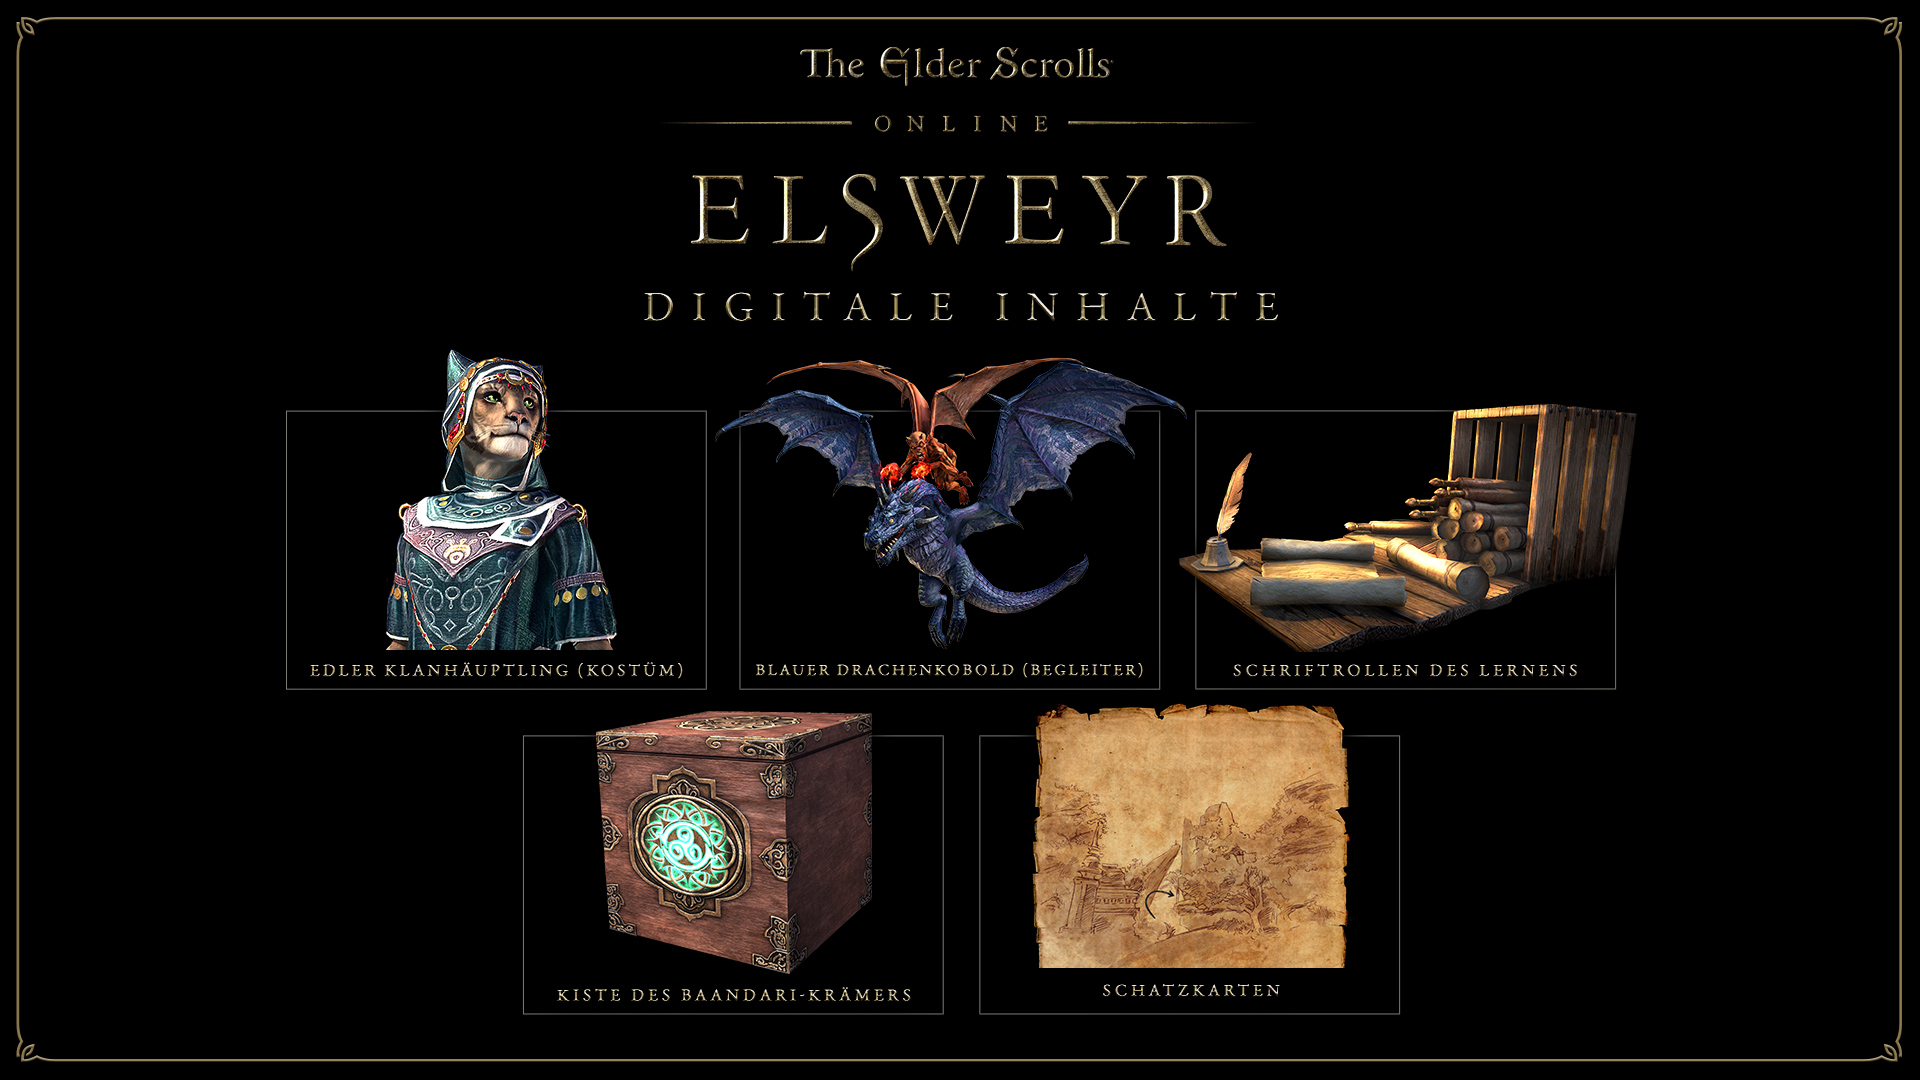 The Elder Scrolls Elsweyr - Online: 4] [PlayStation